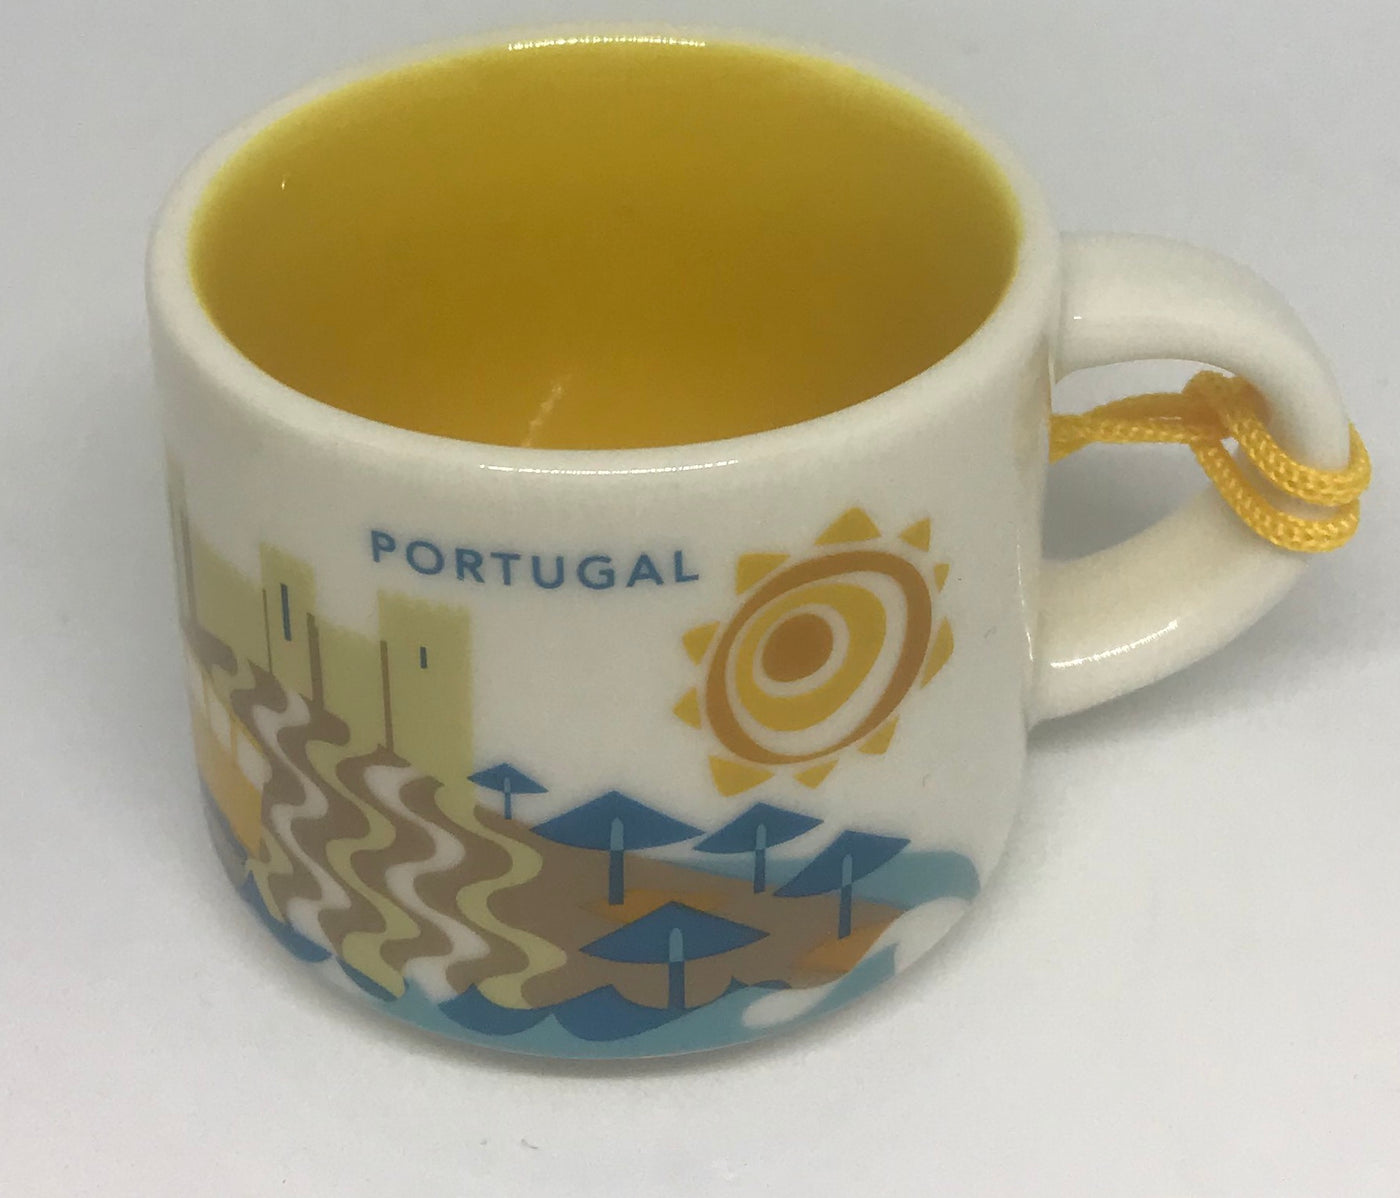 Starbucks Coffee You Are Here Portugal Ceramic Mug Ornament New with Box